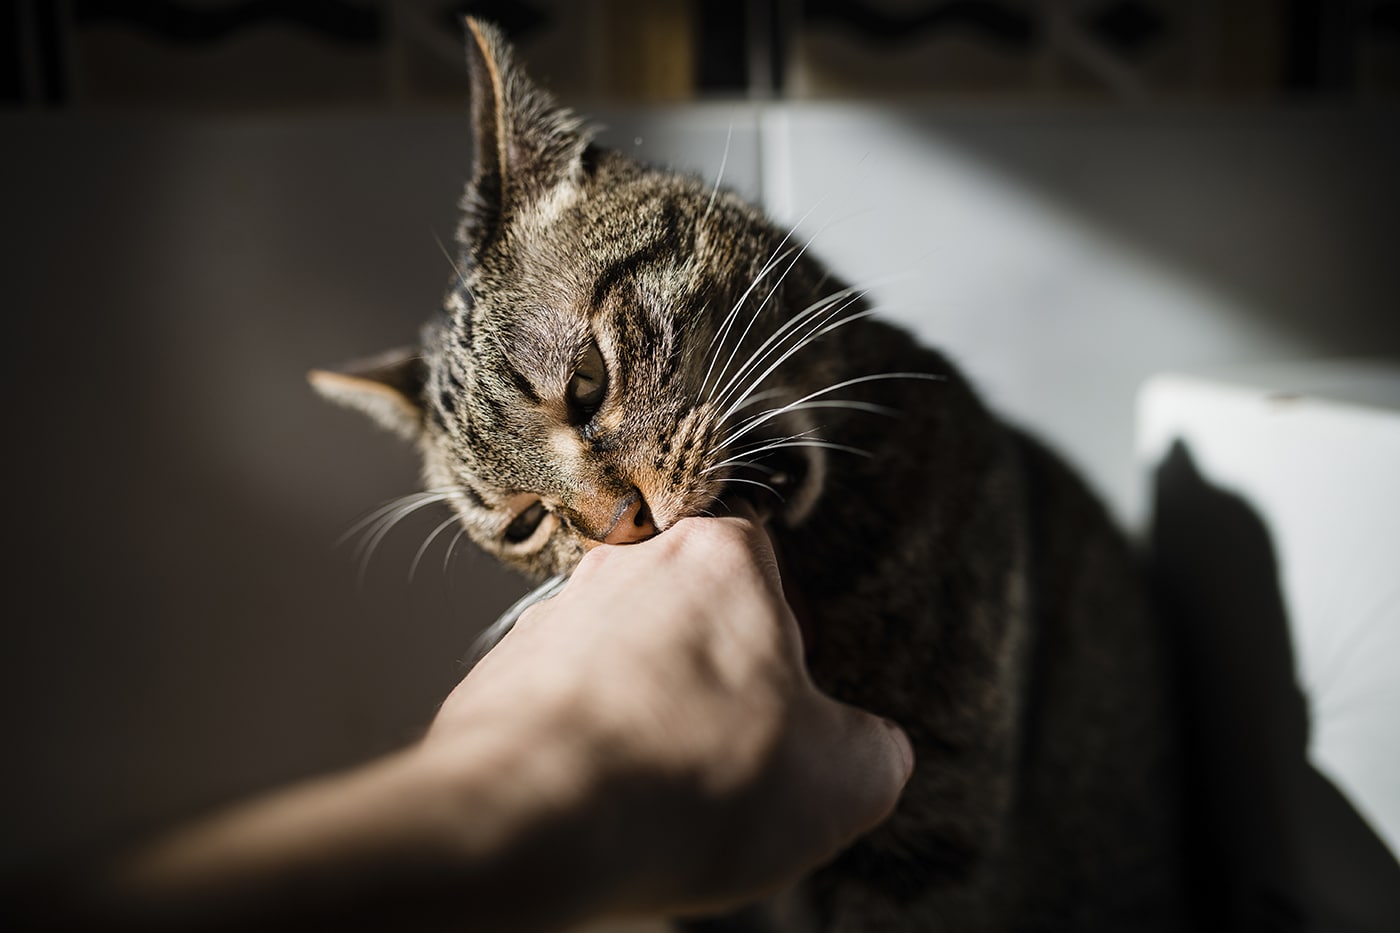 tabby cat biting hand of owner 2022 12 16 22 01 05 utc